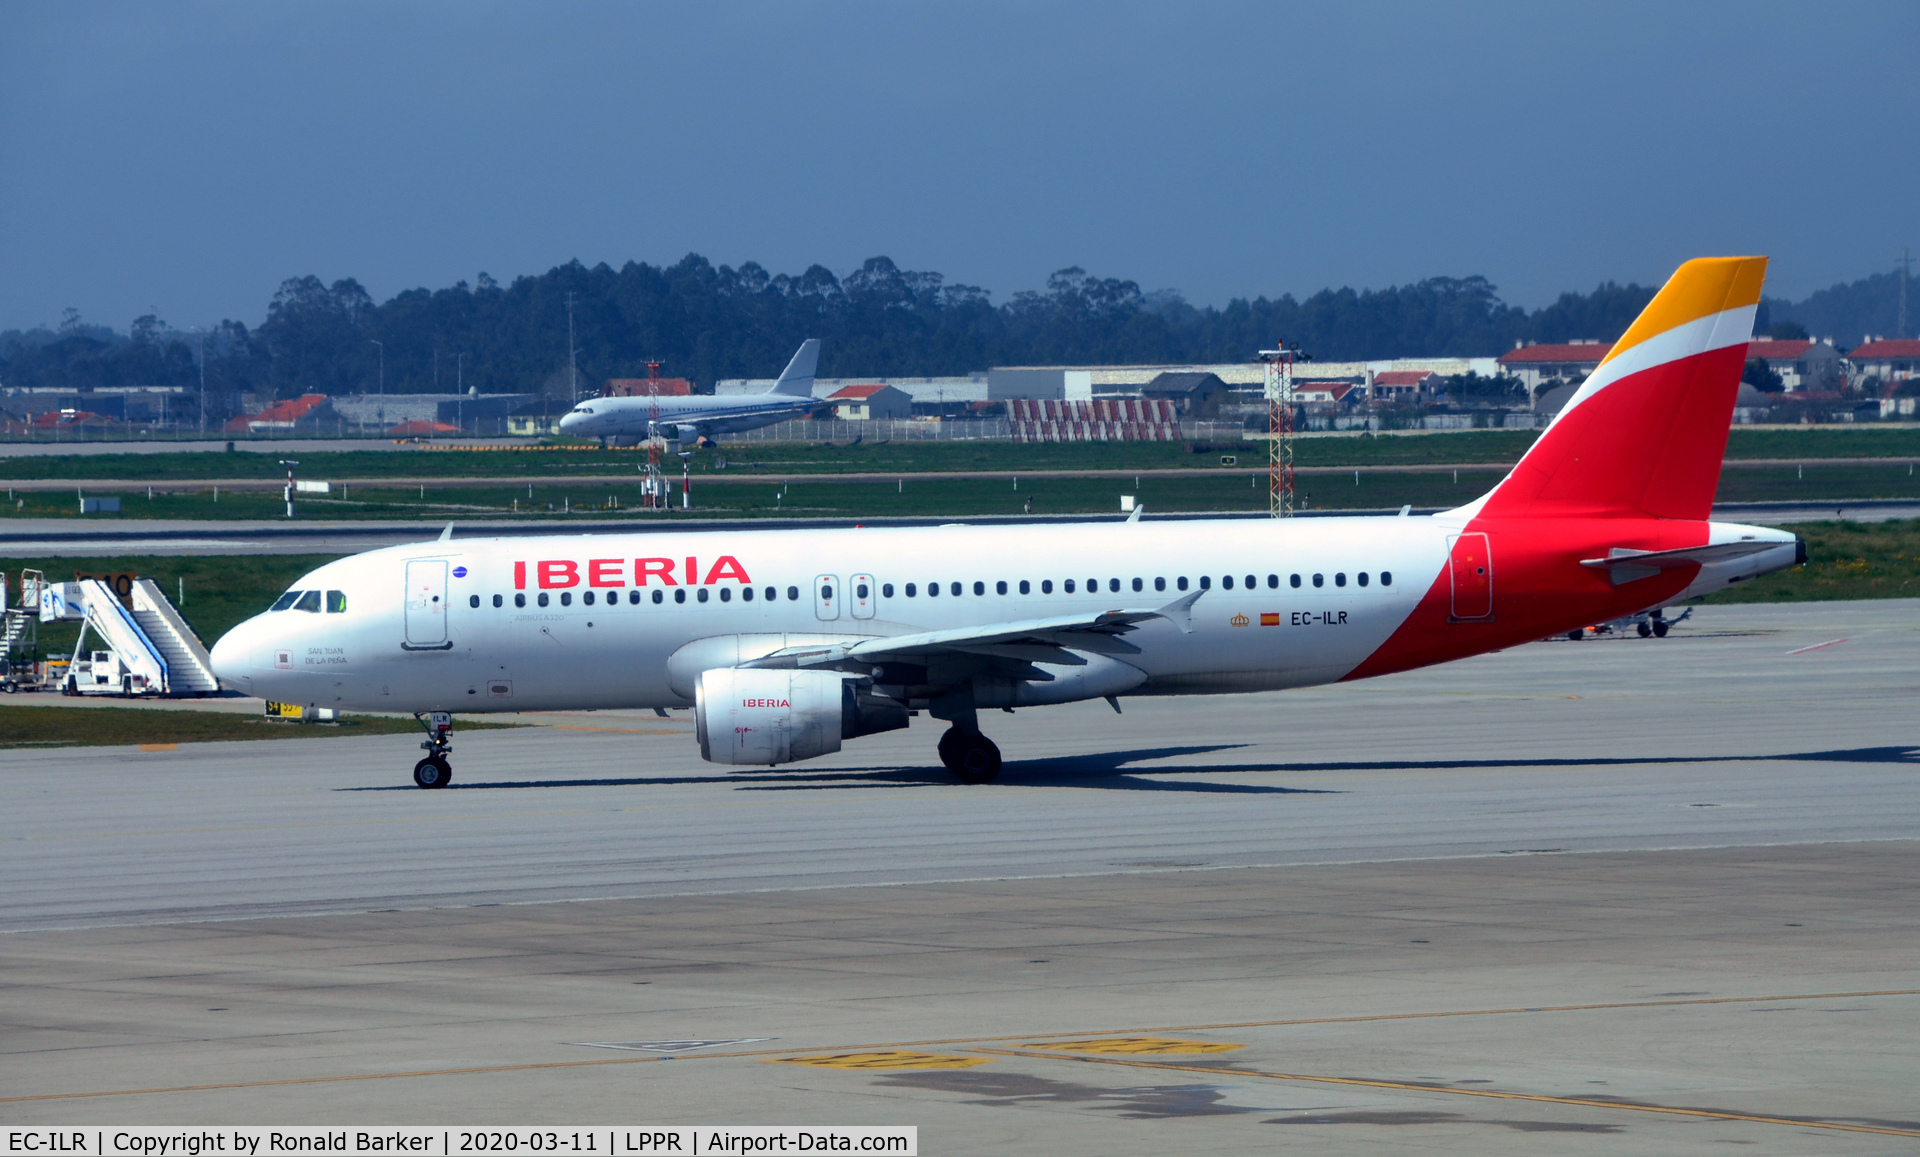 EC-ILR, 2002 Airbus A320-214 C/N 1793, Taxi for takeoff Oporto